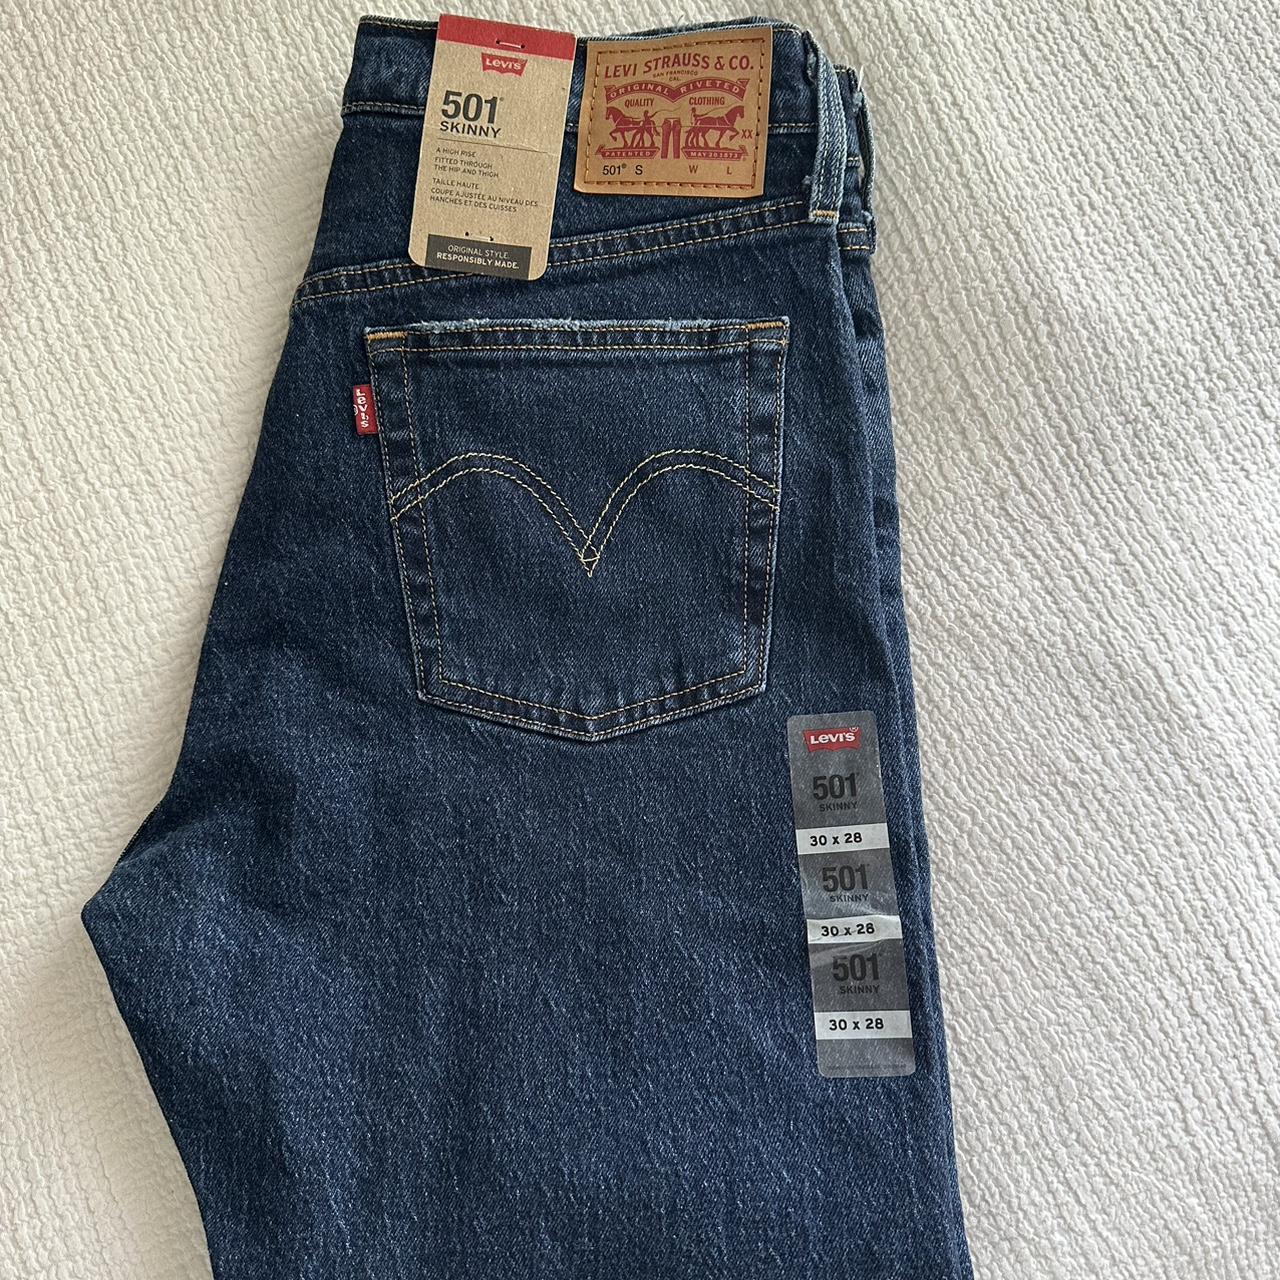 Levi 501 Skinny Jeans 30 x 28 - Depop